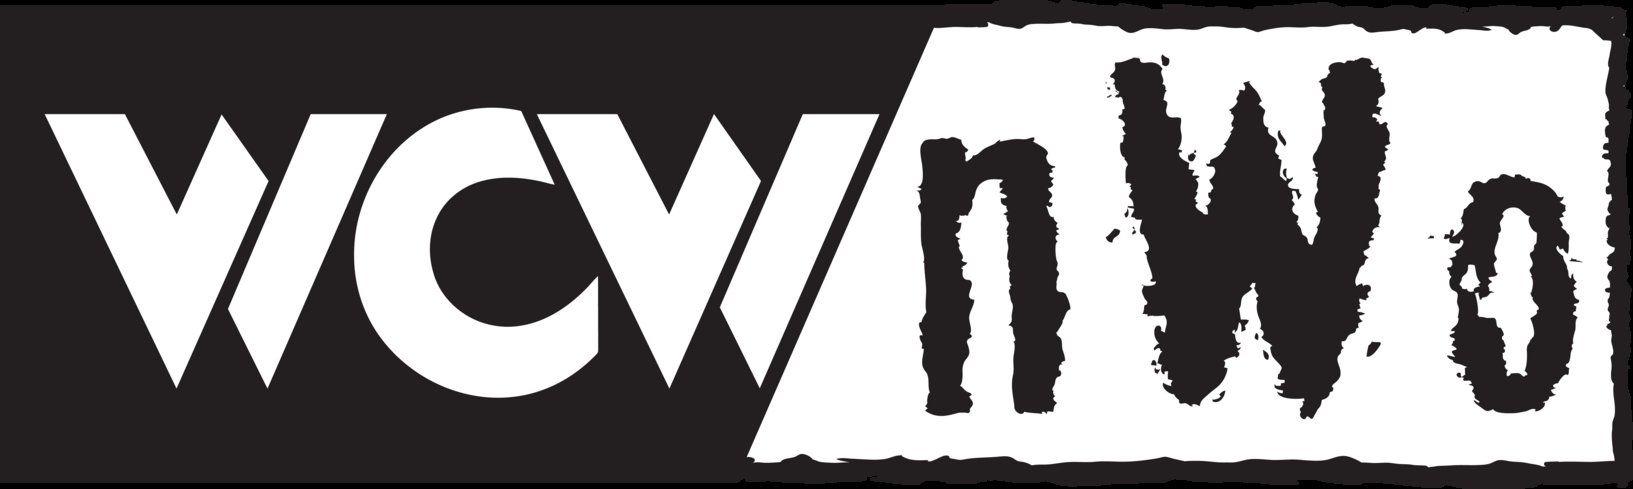 WCW NWO Logo - WCW / nWo Logo by B1ueChr1s on DeviantArt